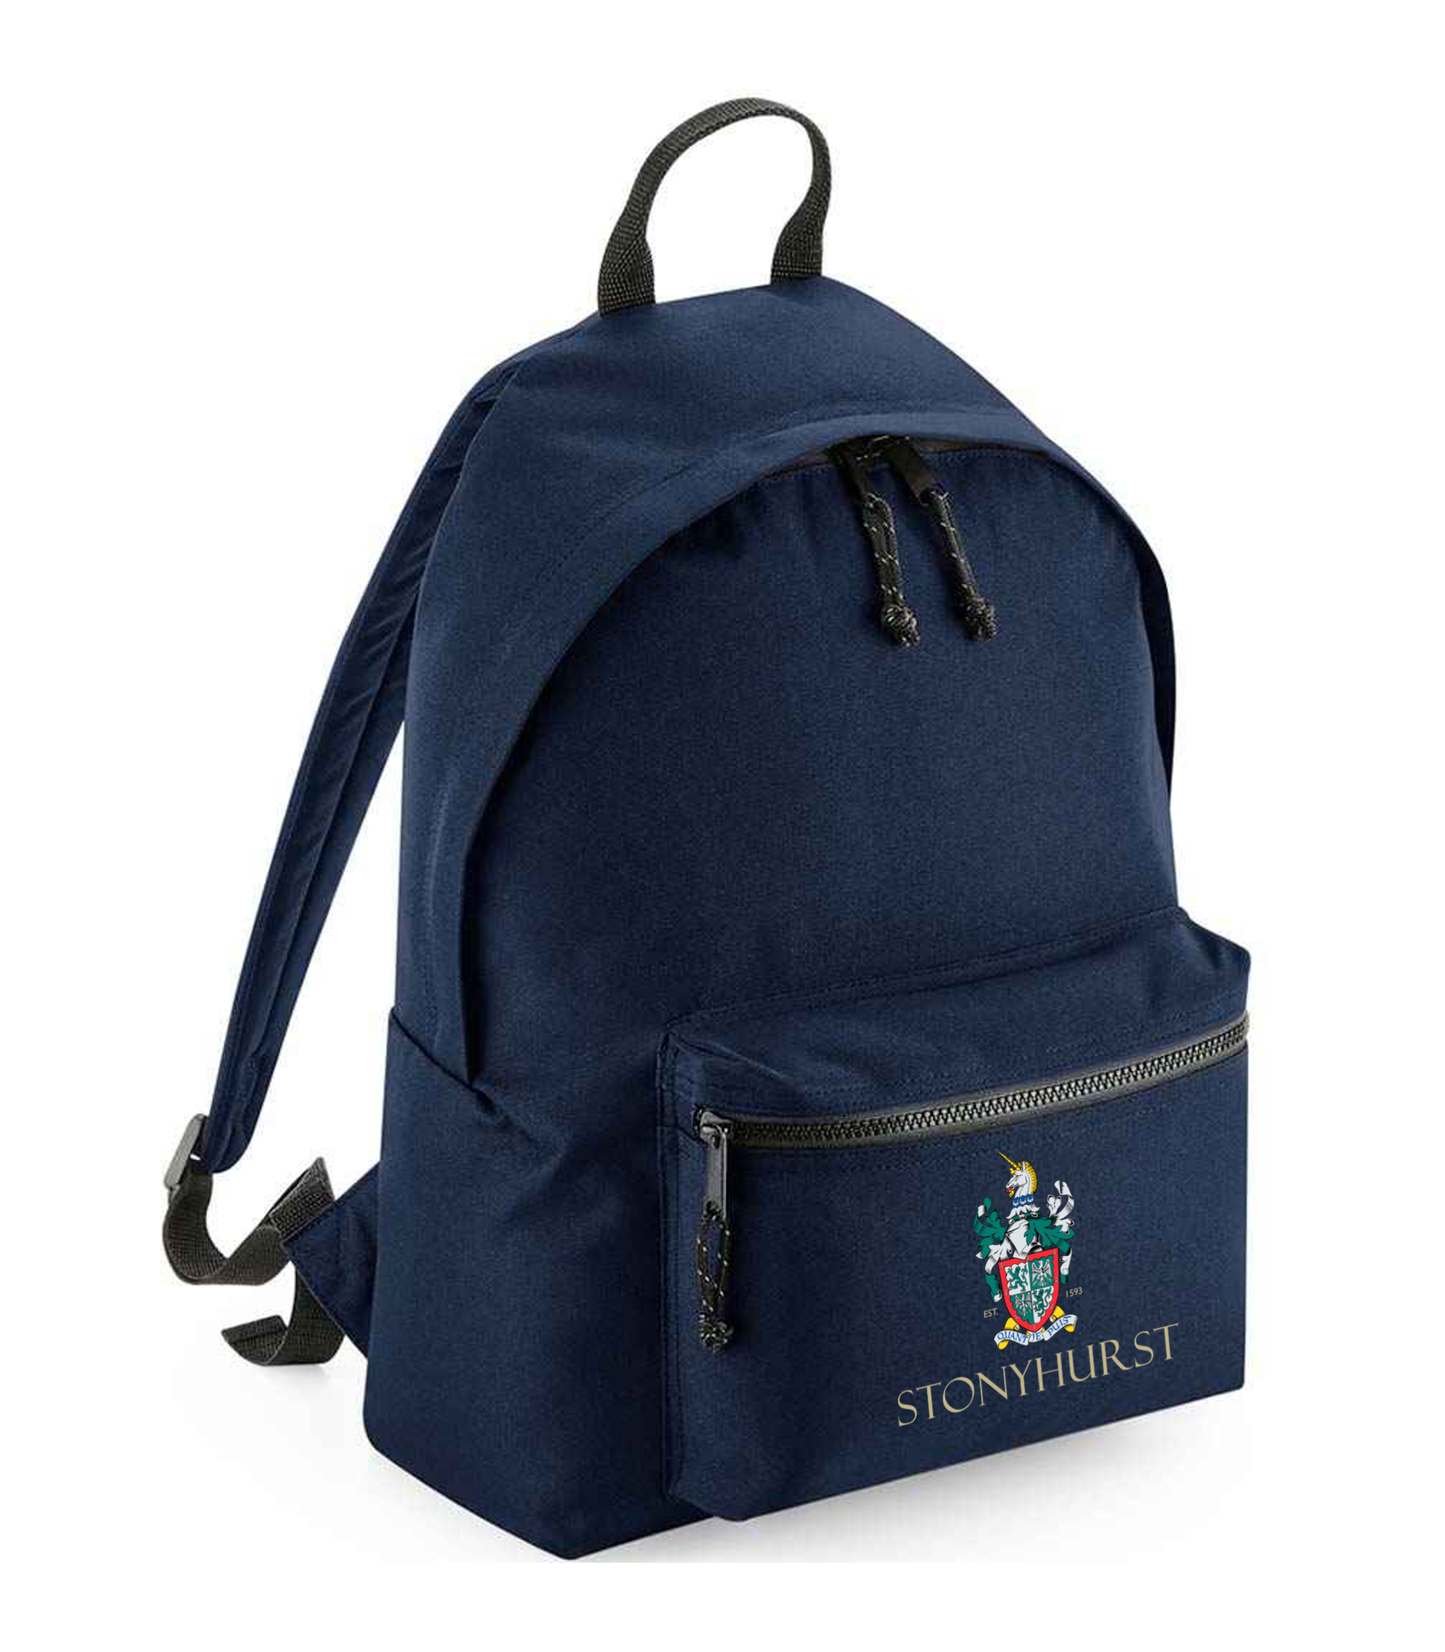 Stonyhurst Recycled Backpack